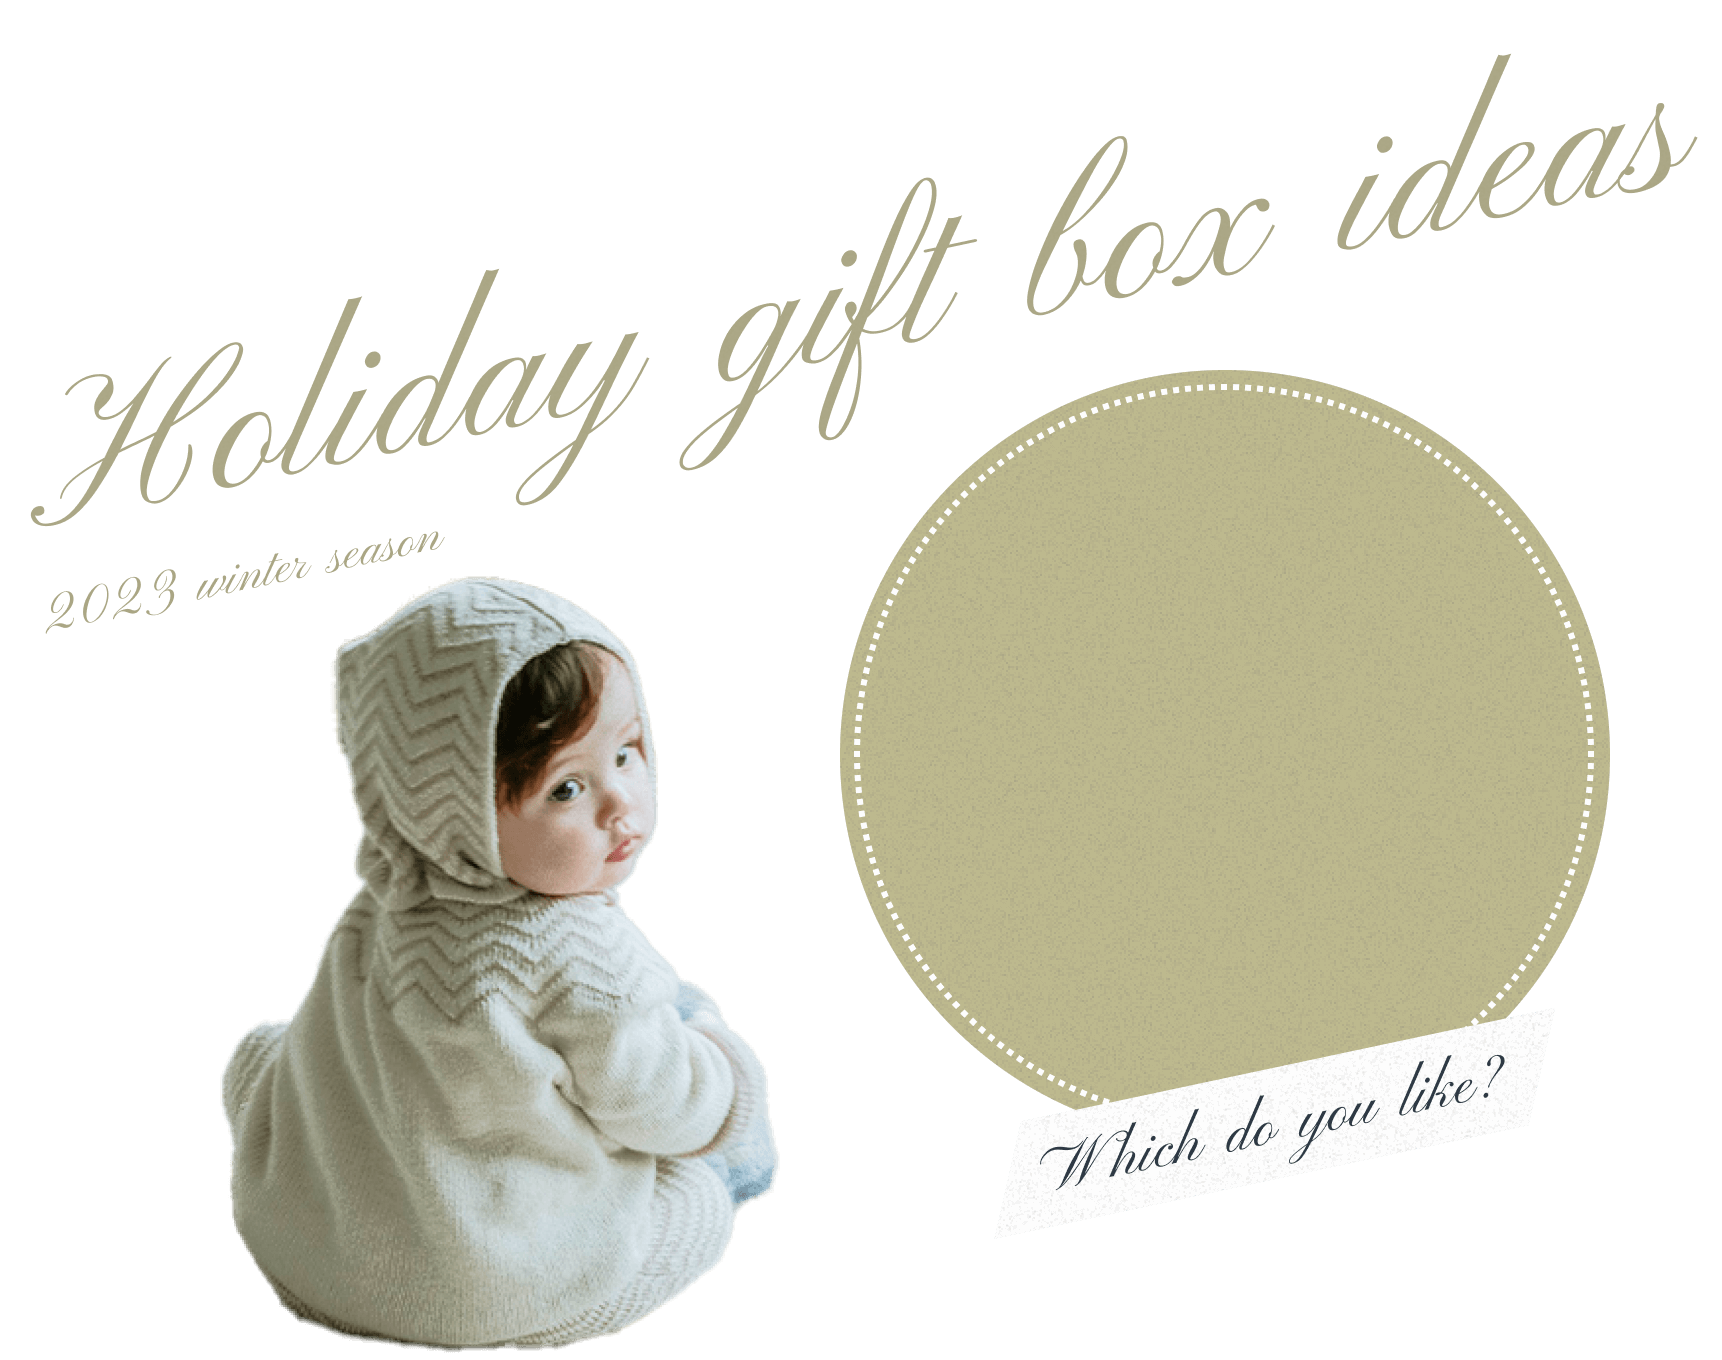 Holiday gift box ideas | MARLMARL